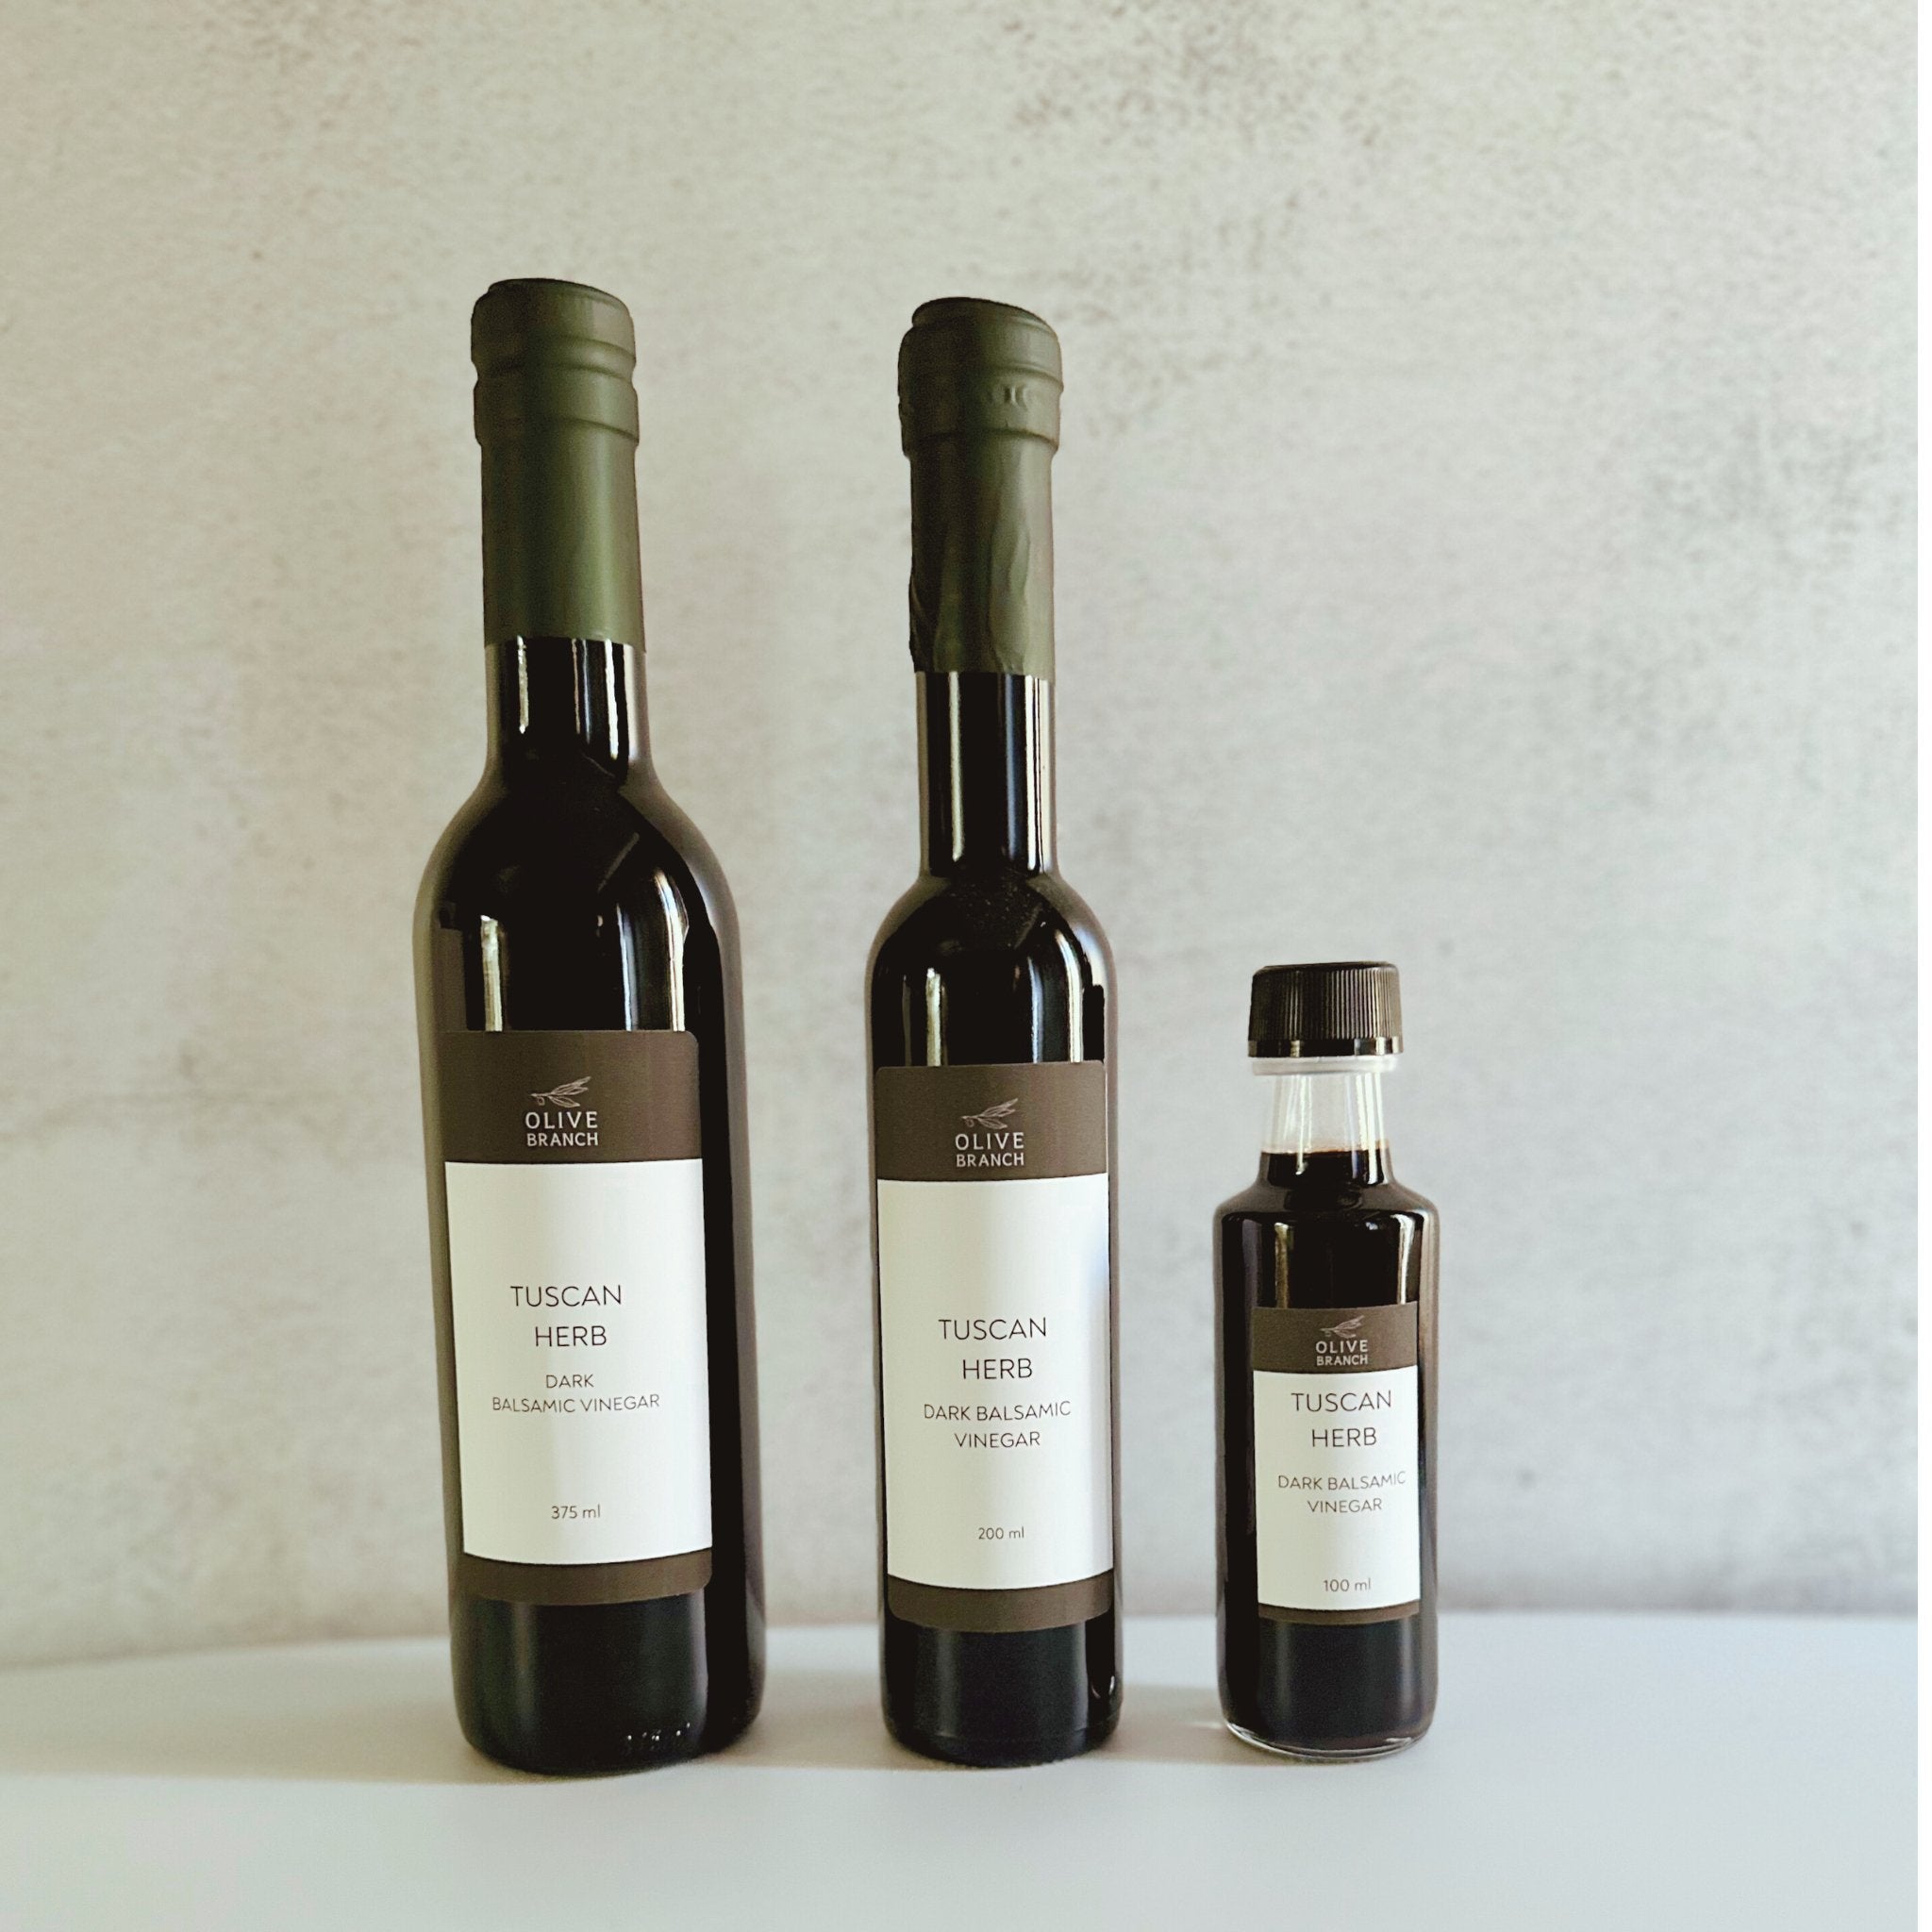 Tuscan Herb Aged Dark Balsamic Vinegar